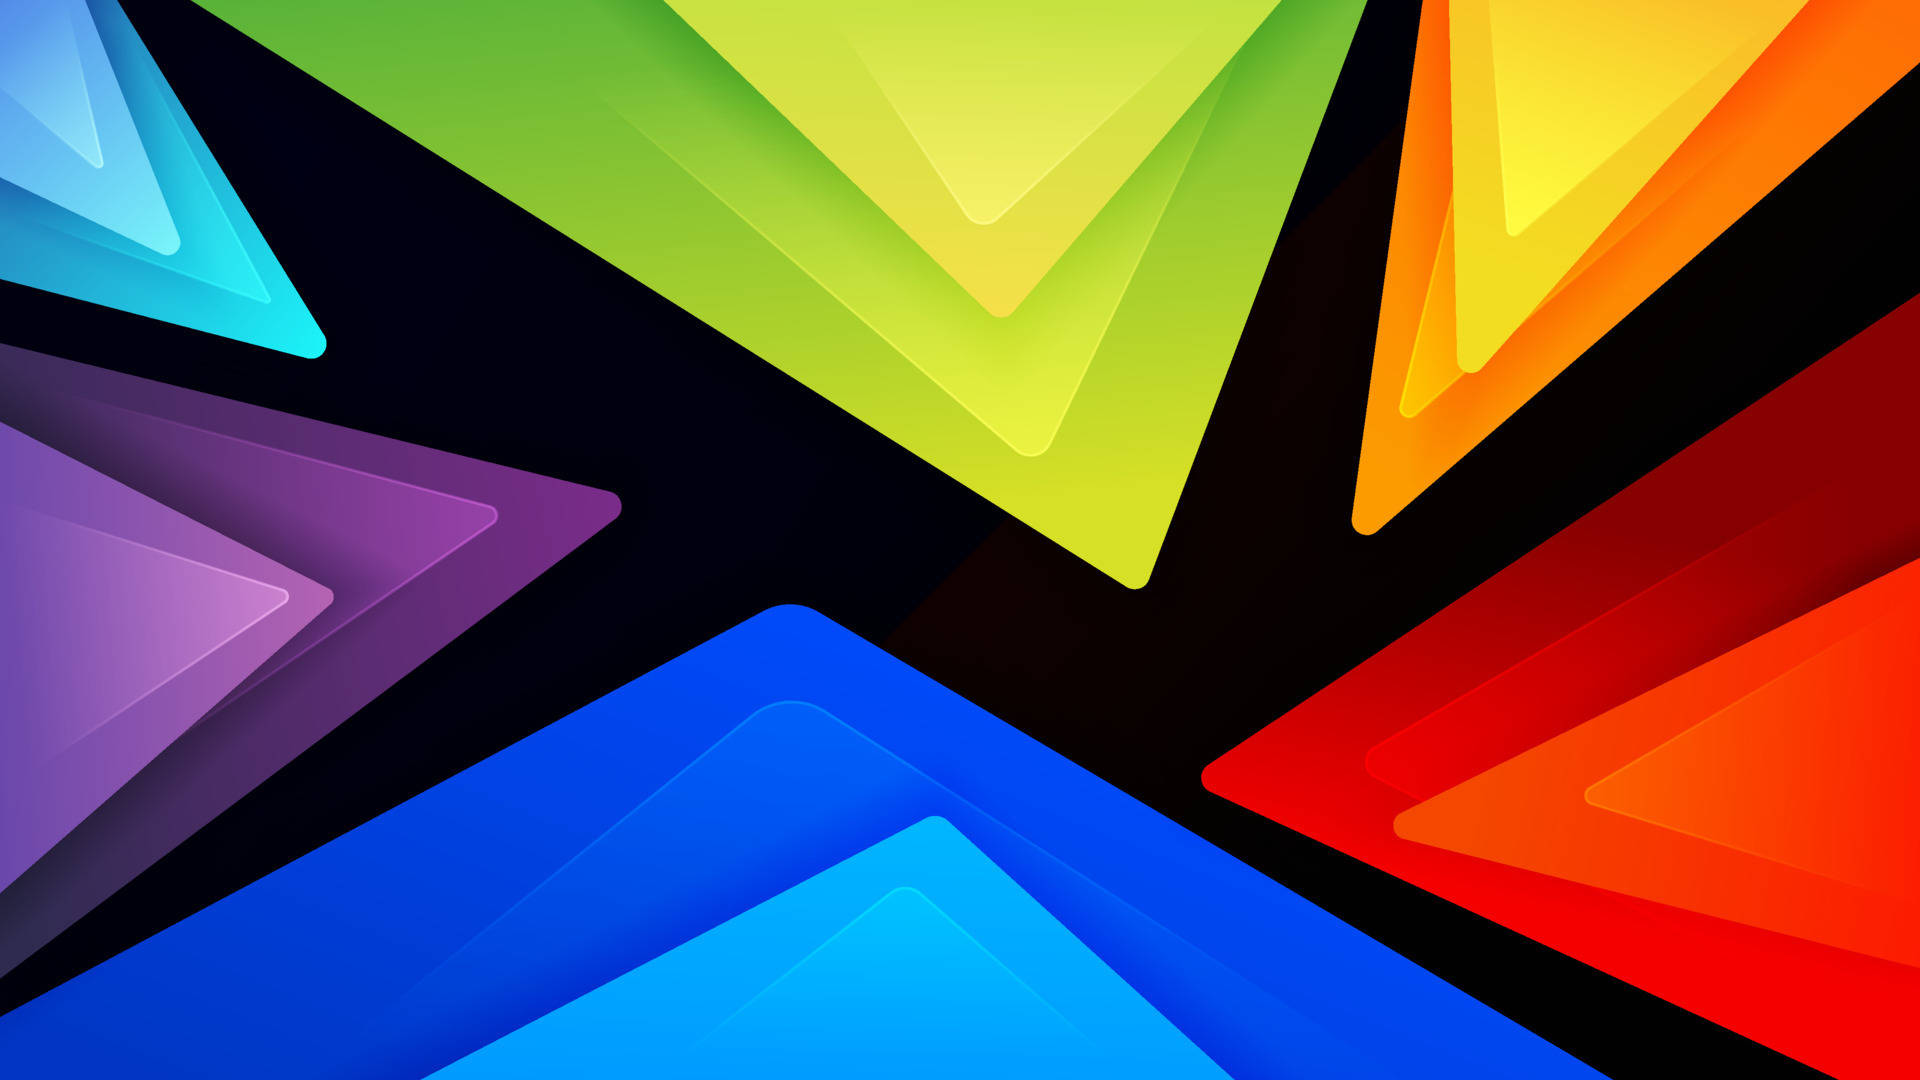 Ipad Pro 12.9 Colorful Triangles Picture